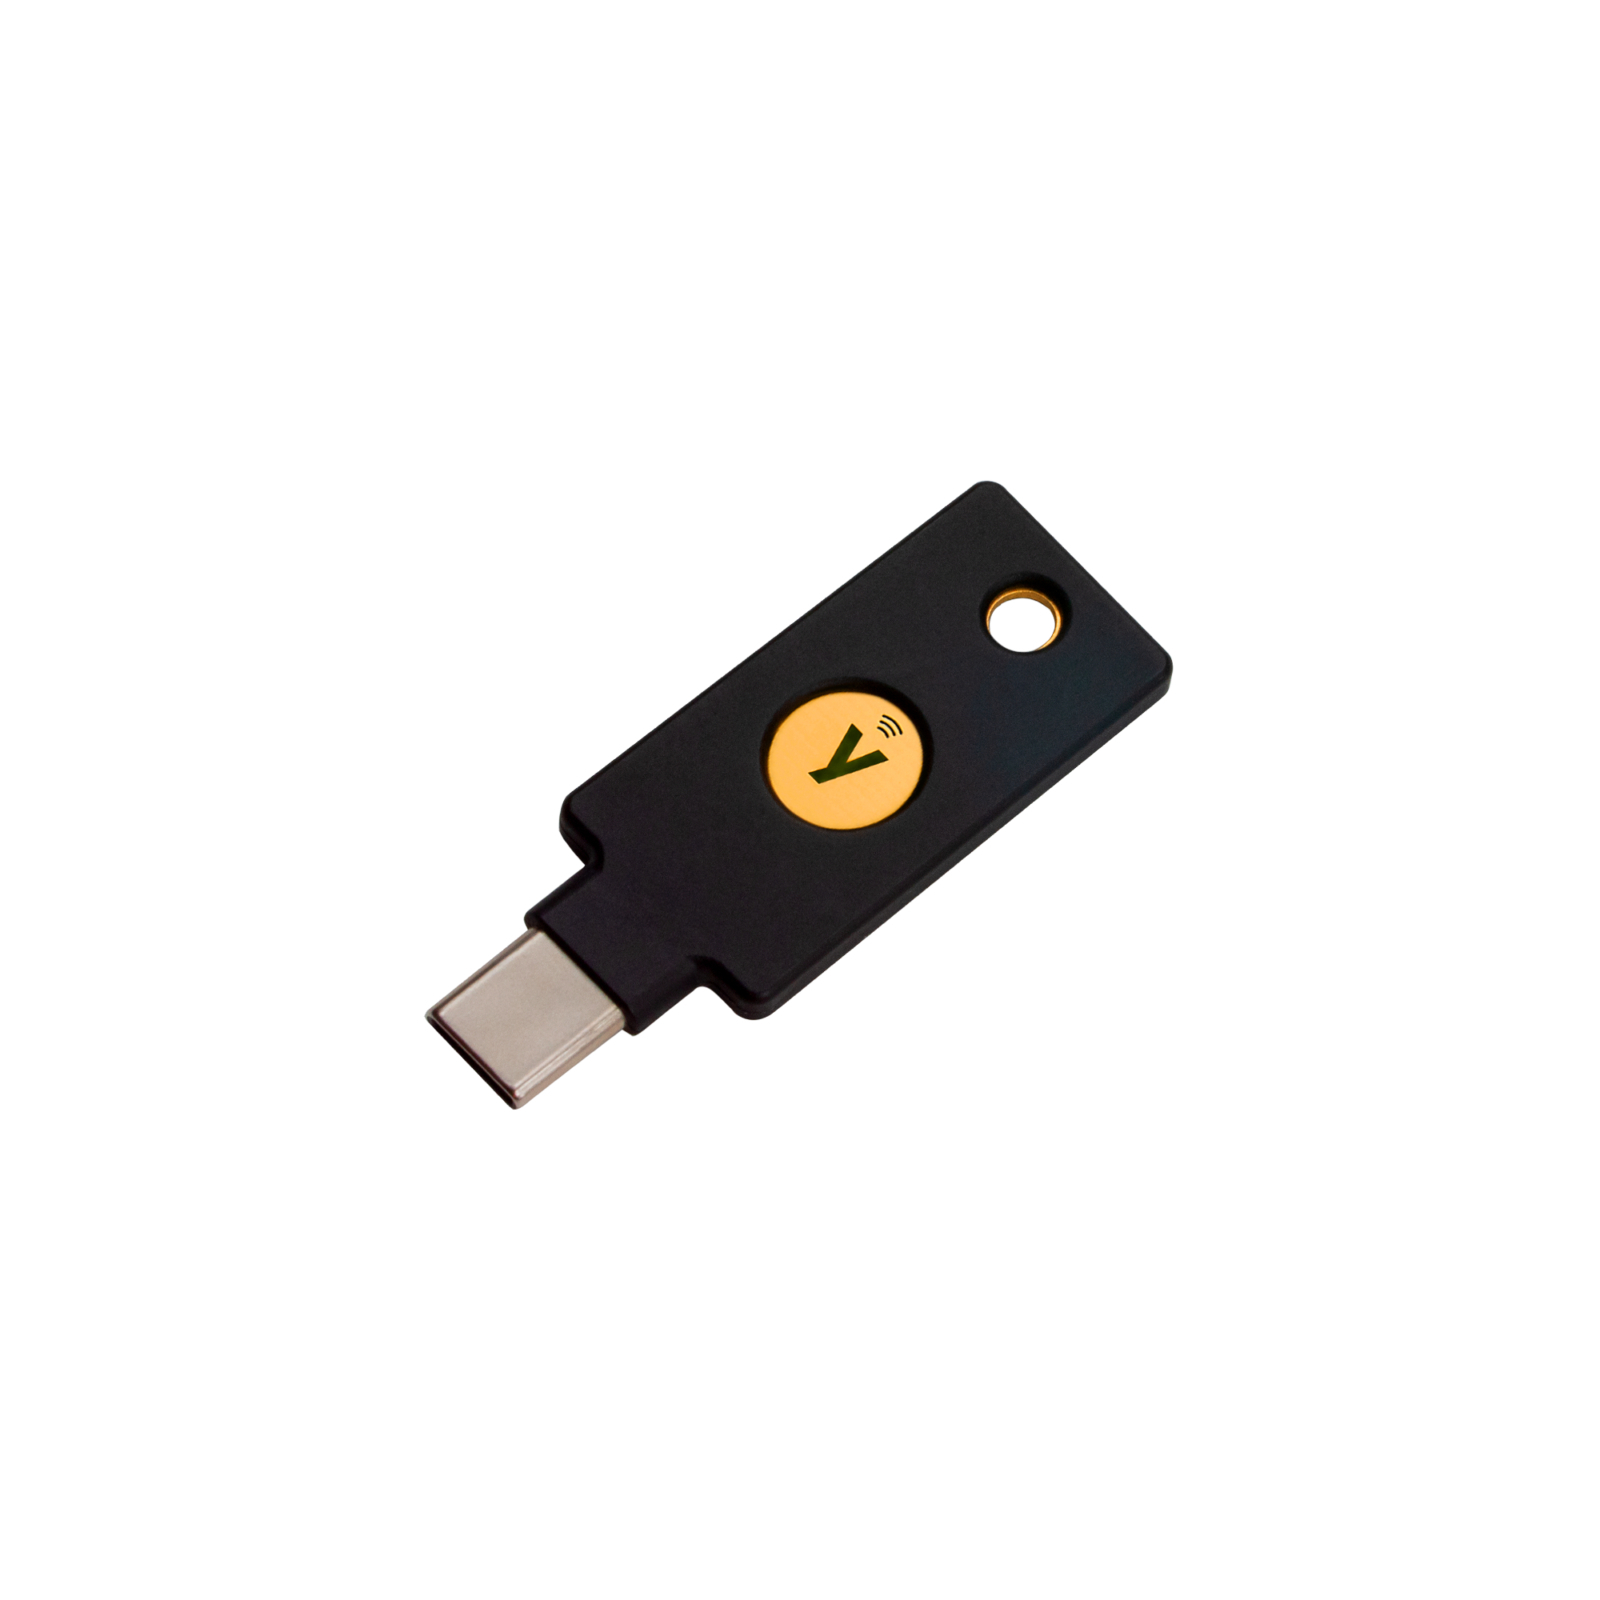 Аппаратный ключ безопасности Yubico YubiKey 5C NFC FIPS (YubiKey_5C_NFC_FIPS)